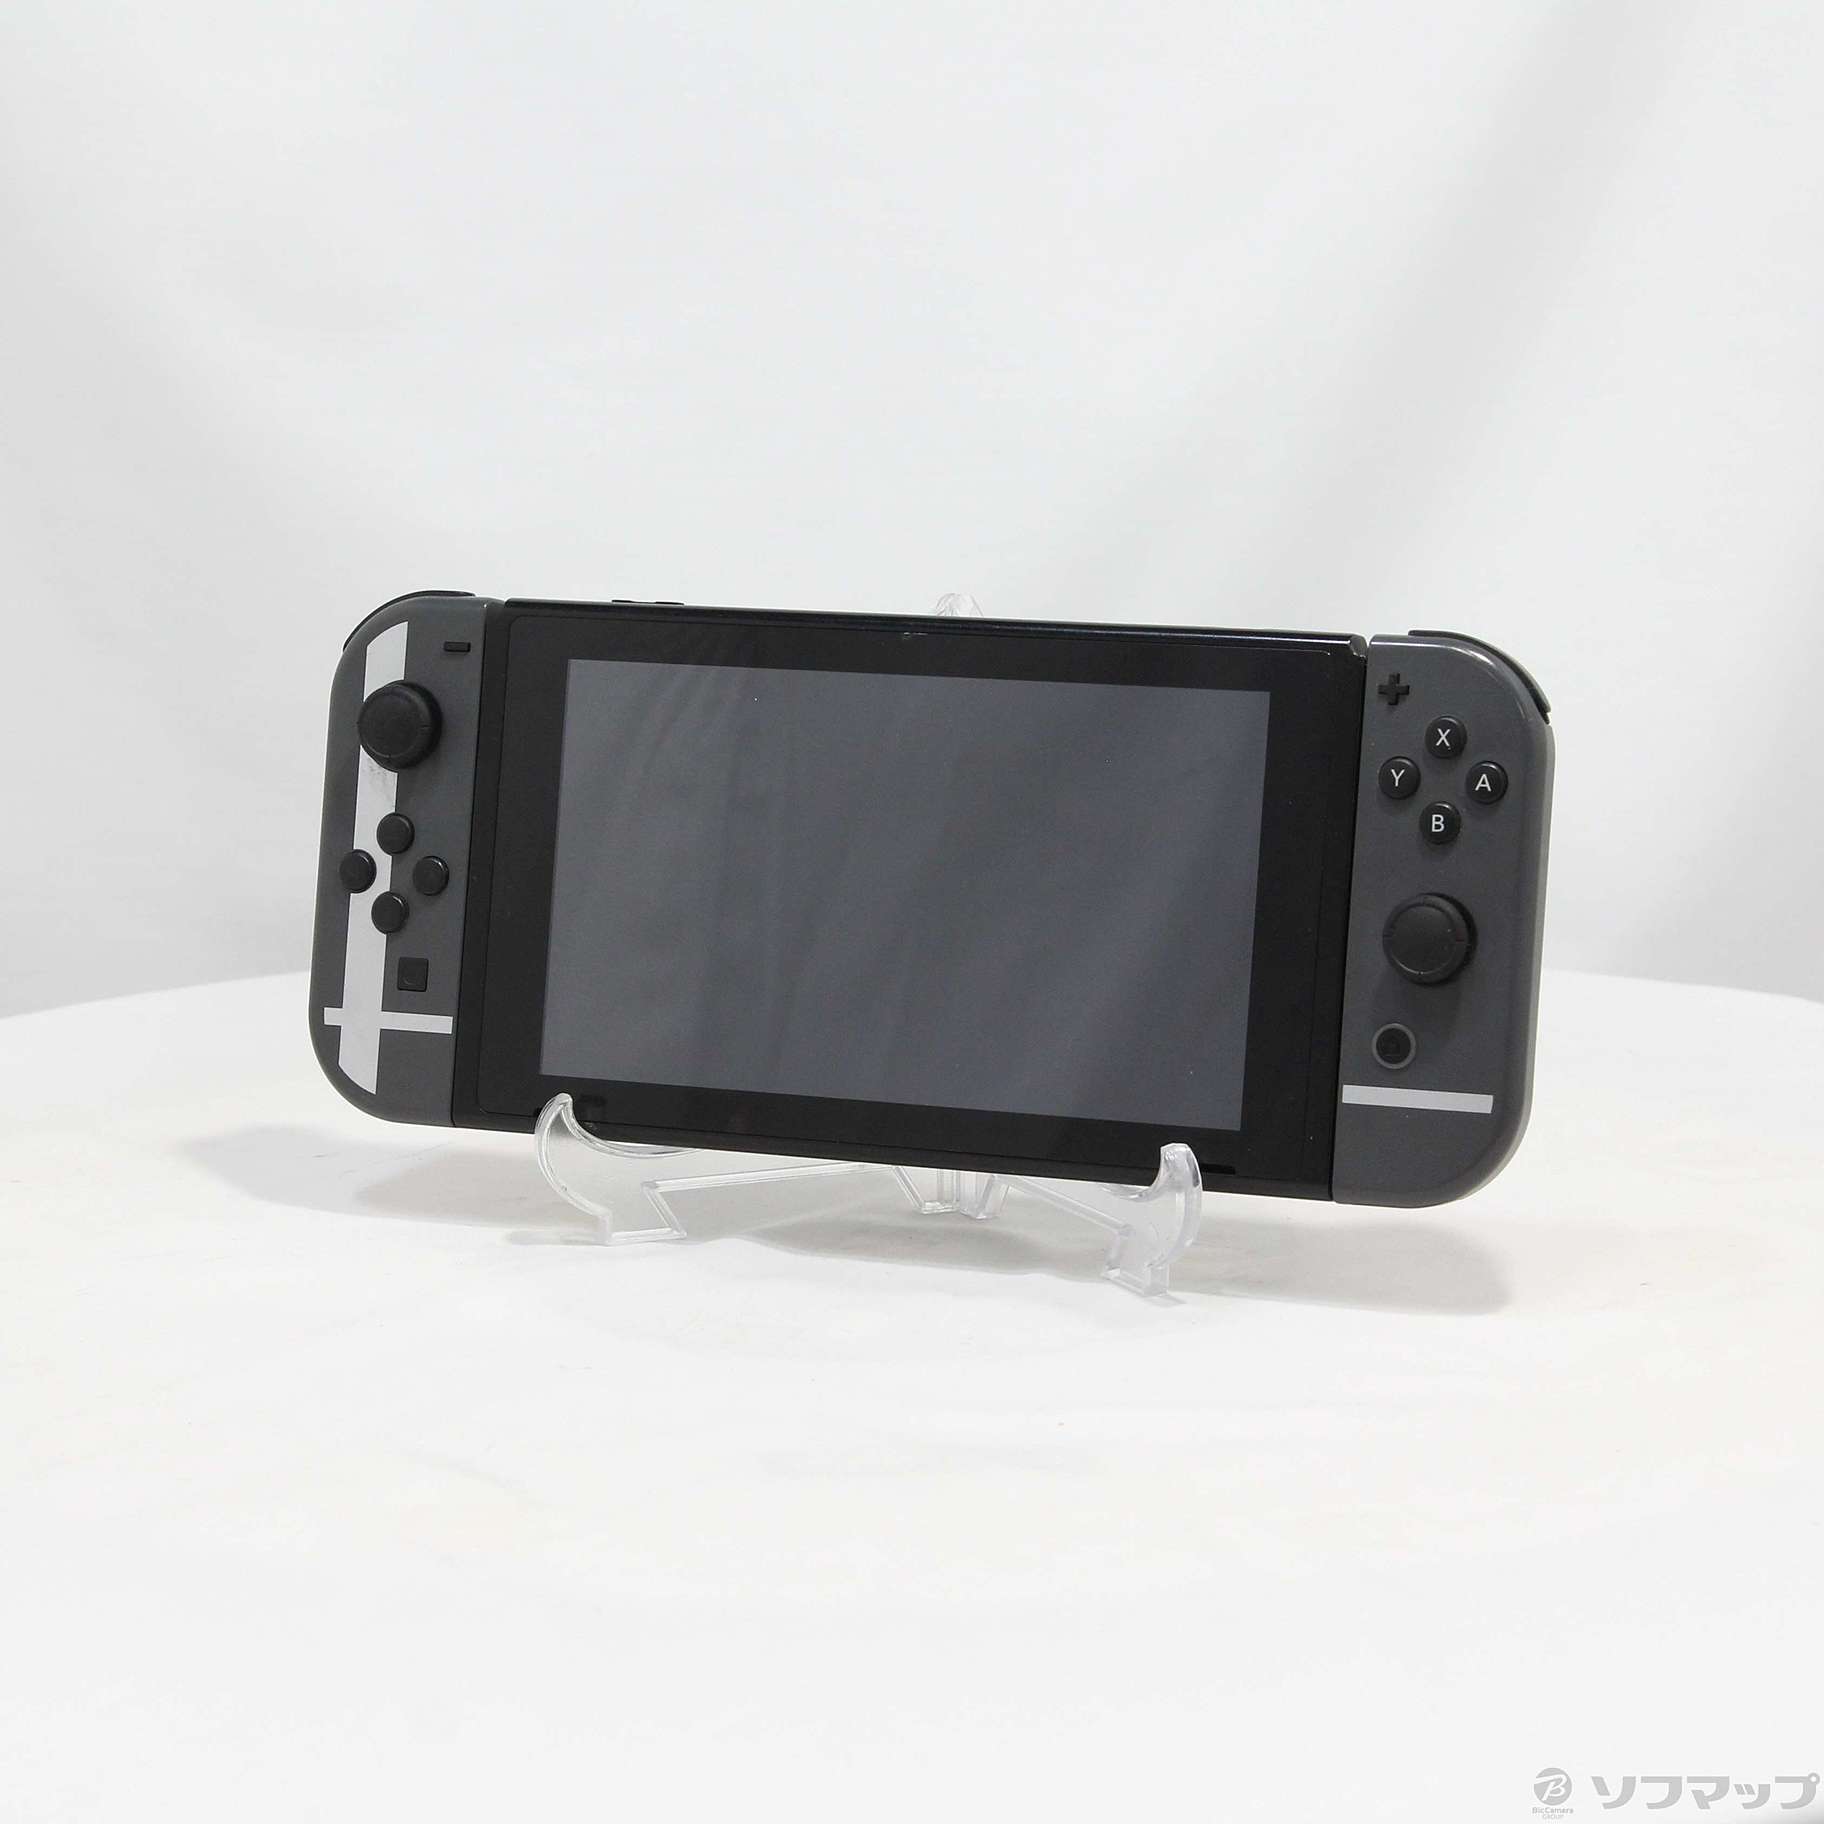 Nintendo Switch 大乱闘スマッシュブラザーズ SPECIALセット